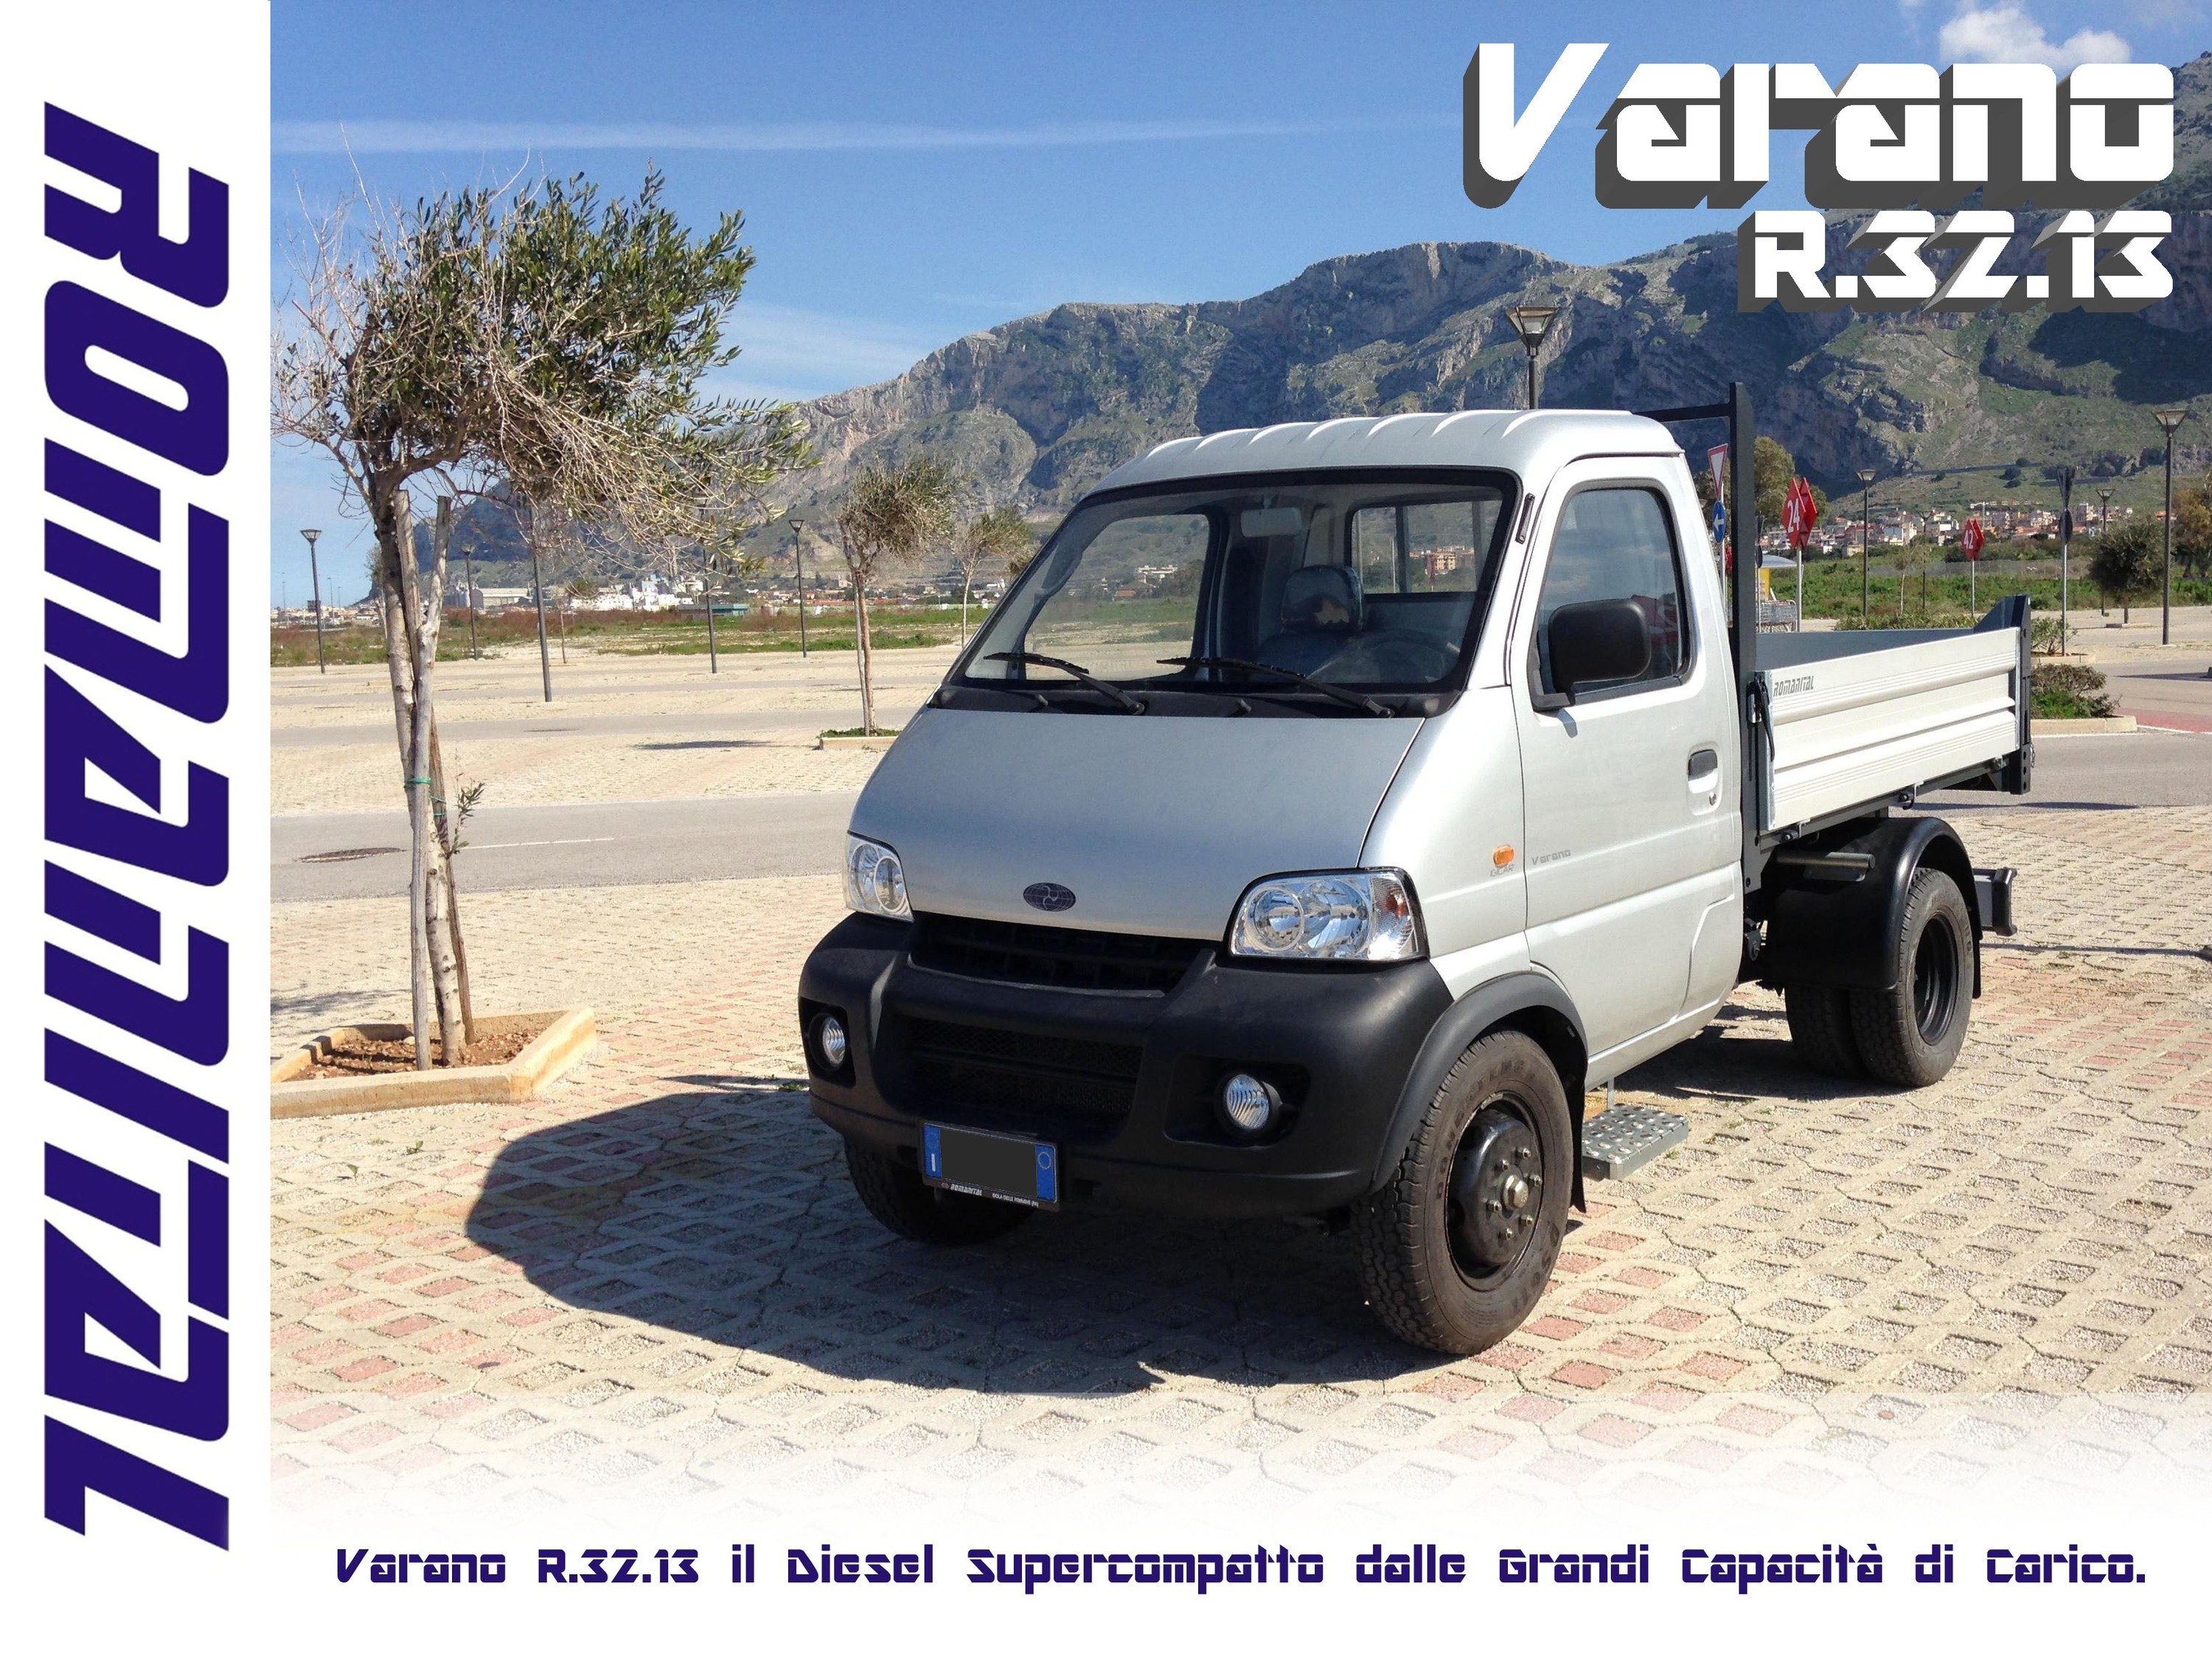 Romanital Varano R.32.13 Varano R.32.13 2.5 D Autotelaio Cabinato